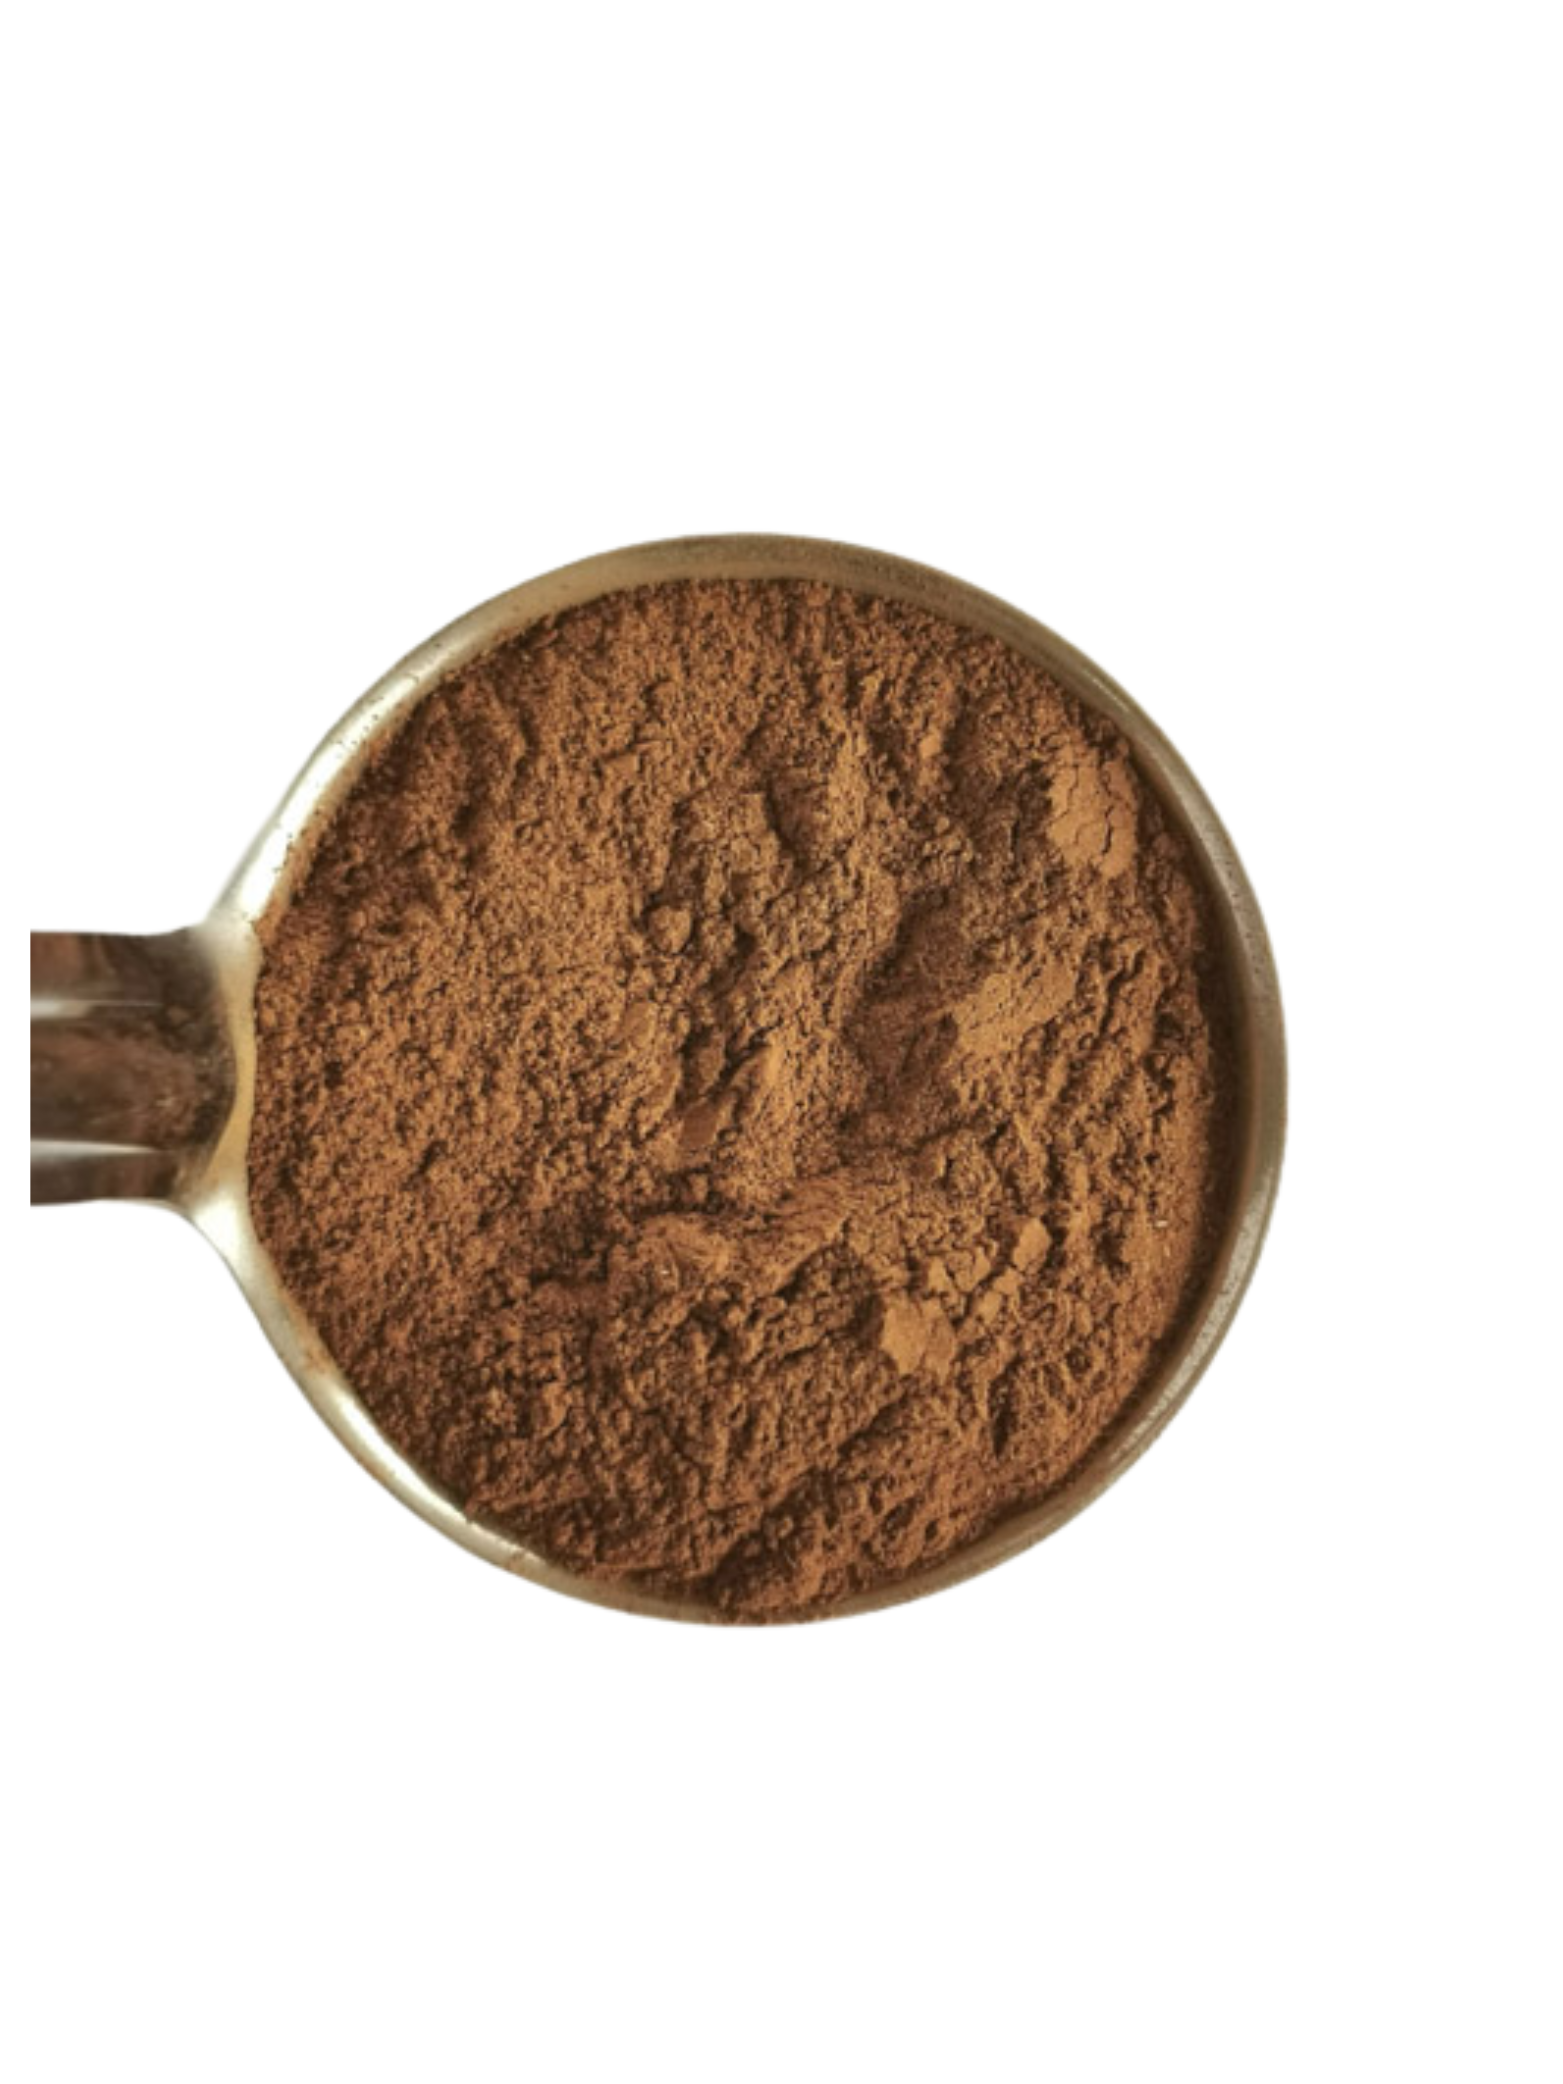 Cinnamon - powder